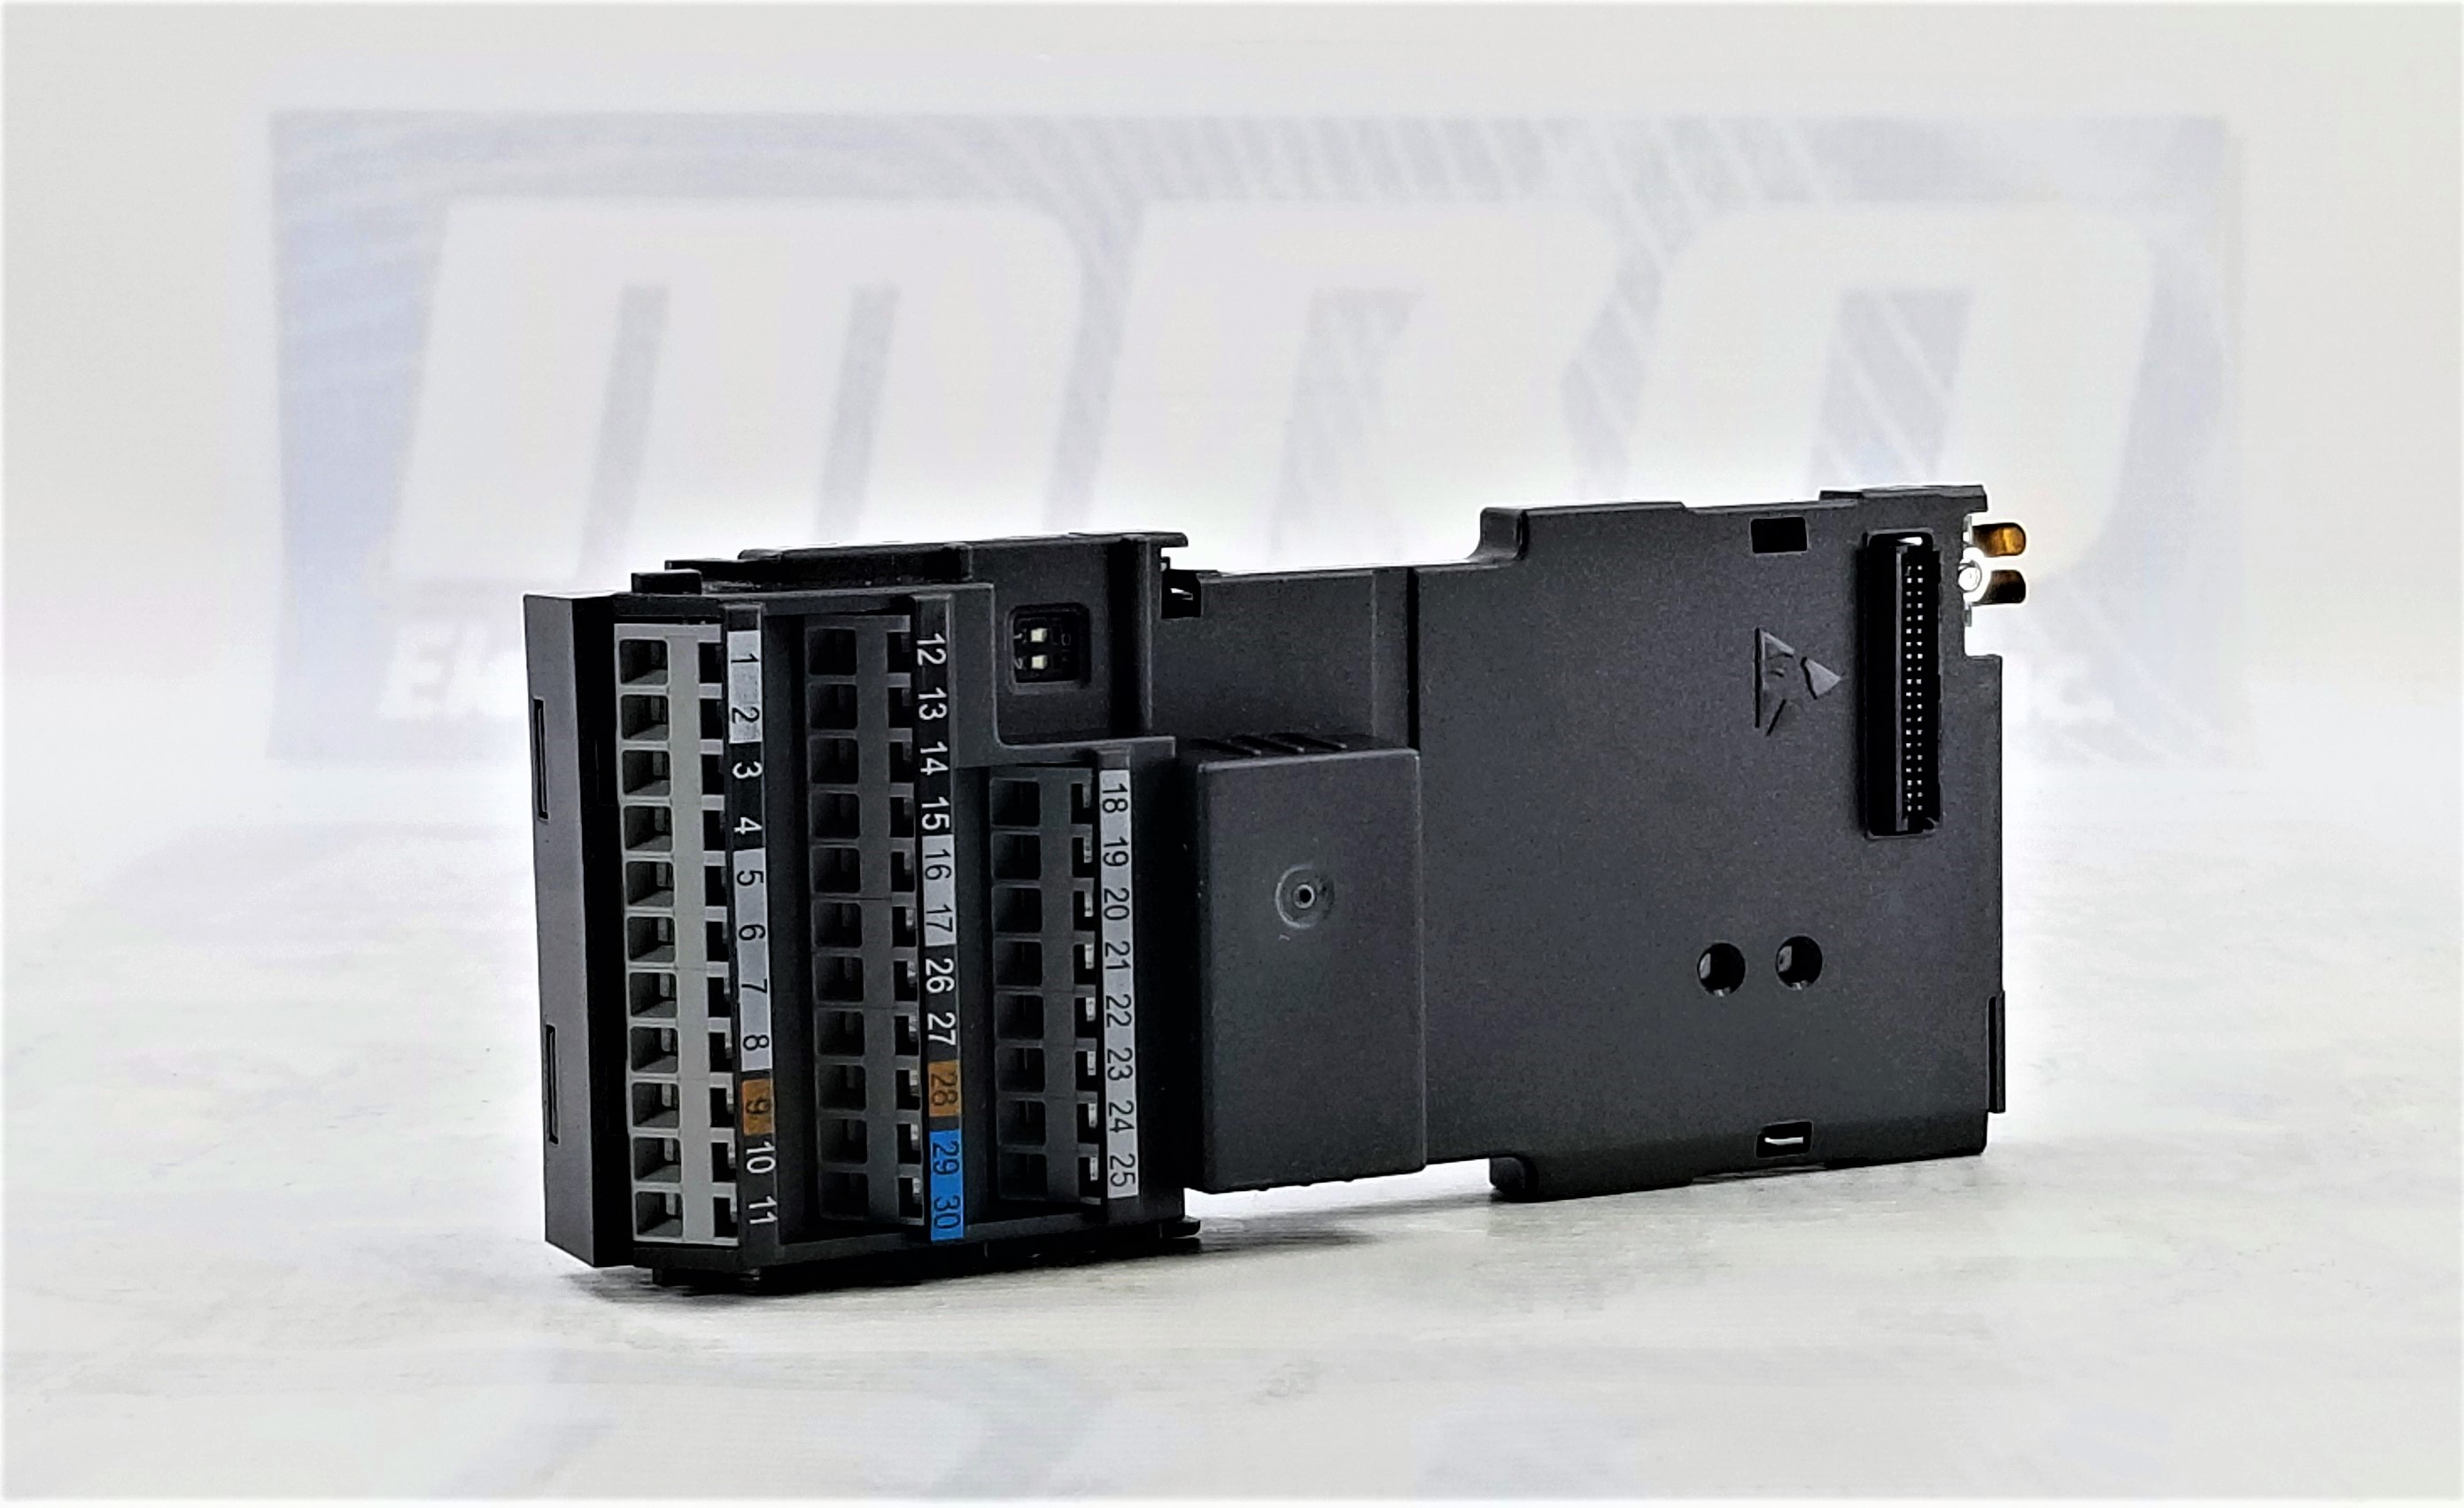 Details about   NIB Siemens MM440 I/O Module        6SE6400-7AA00-0BA0     A5E02360178 